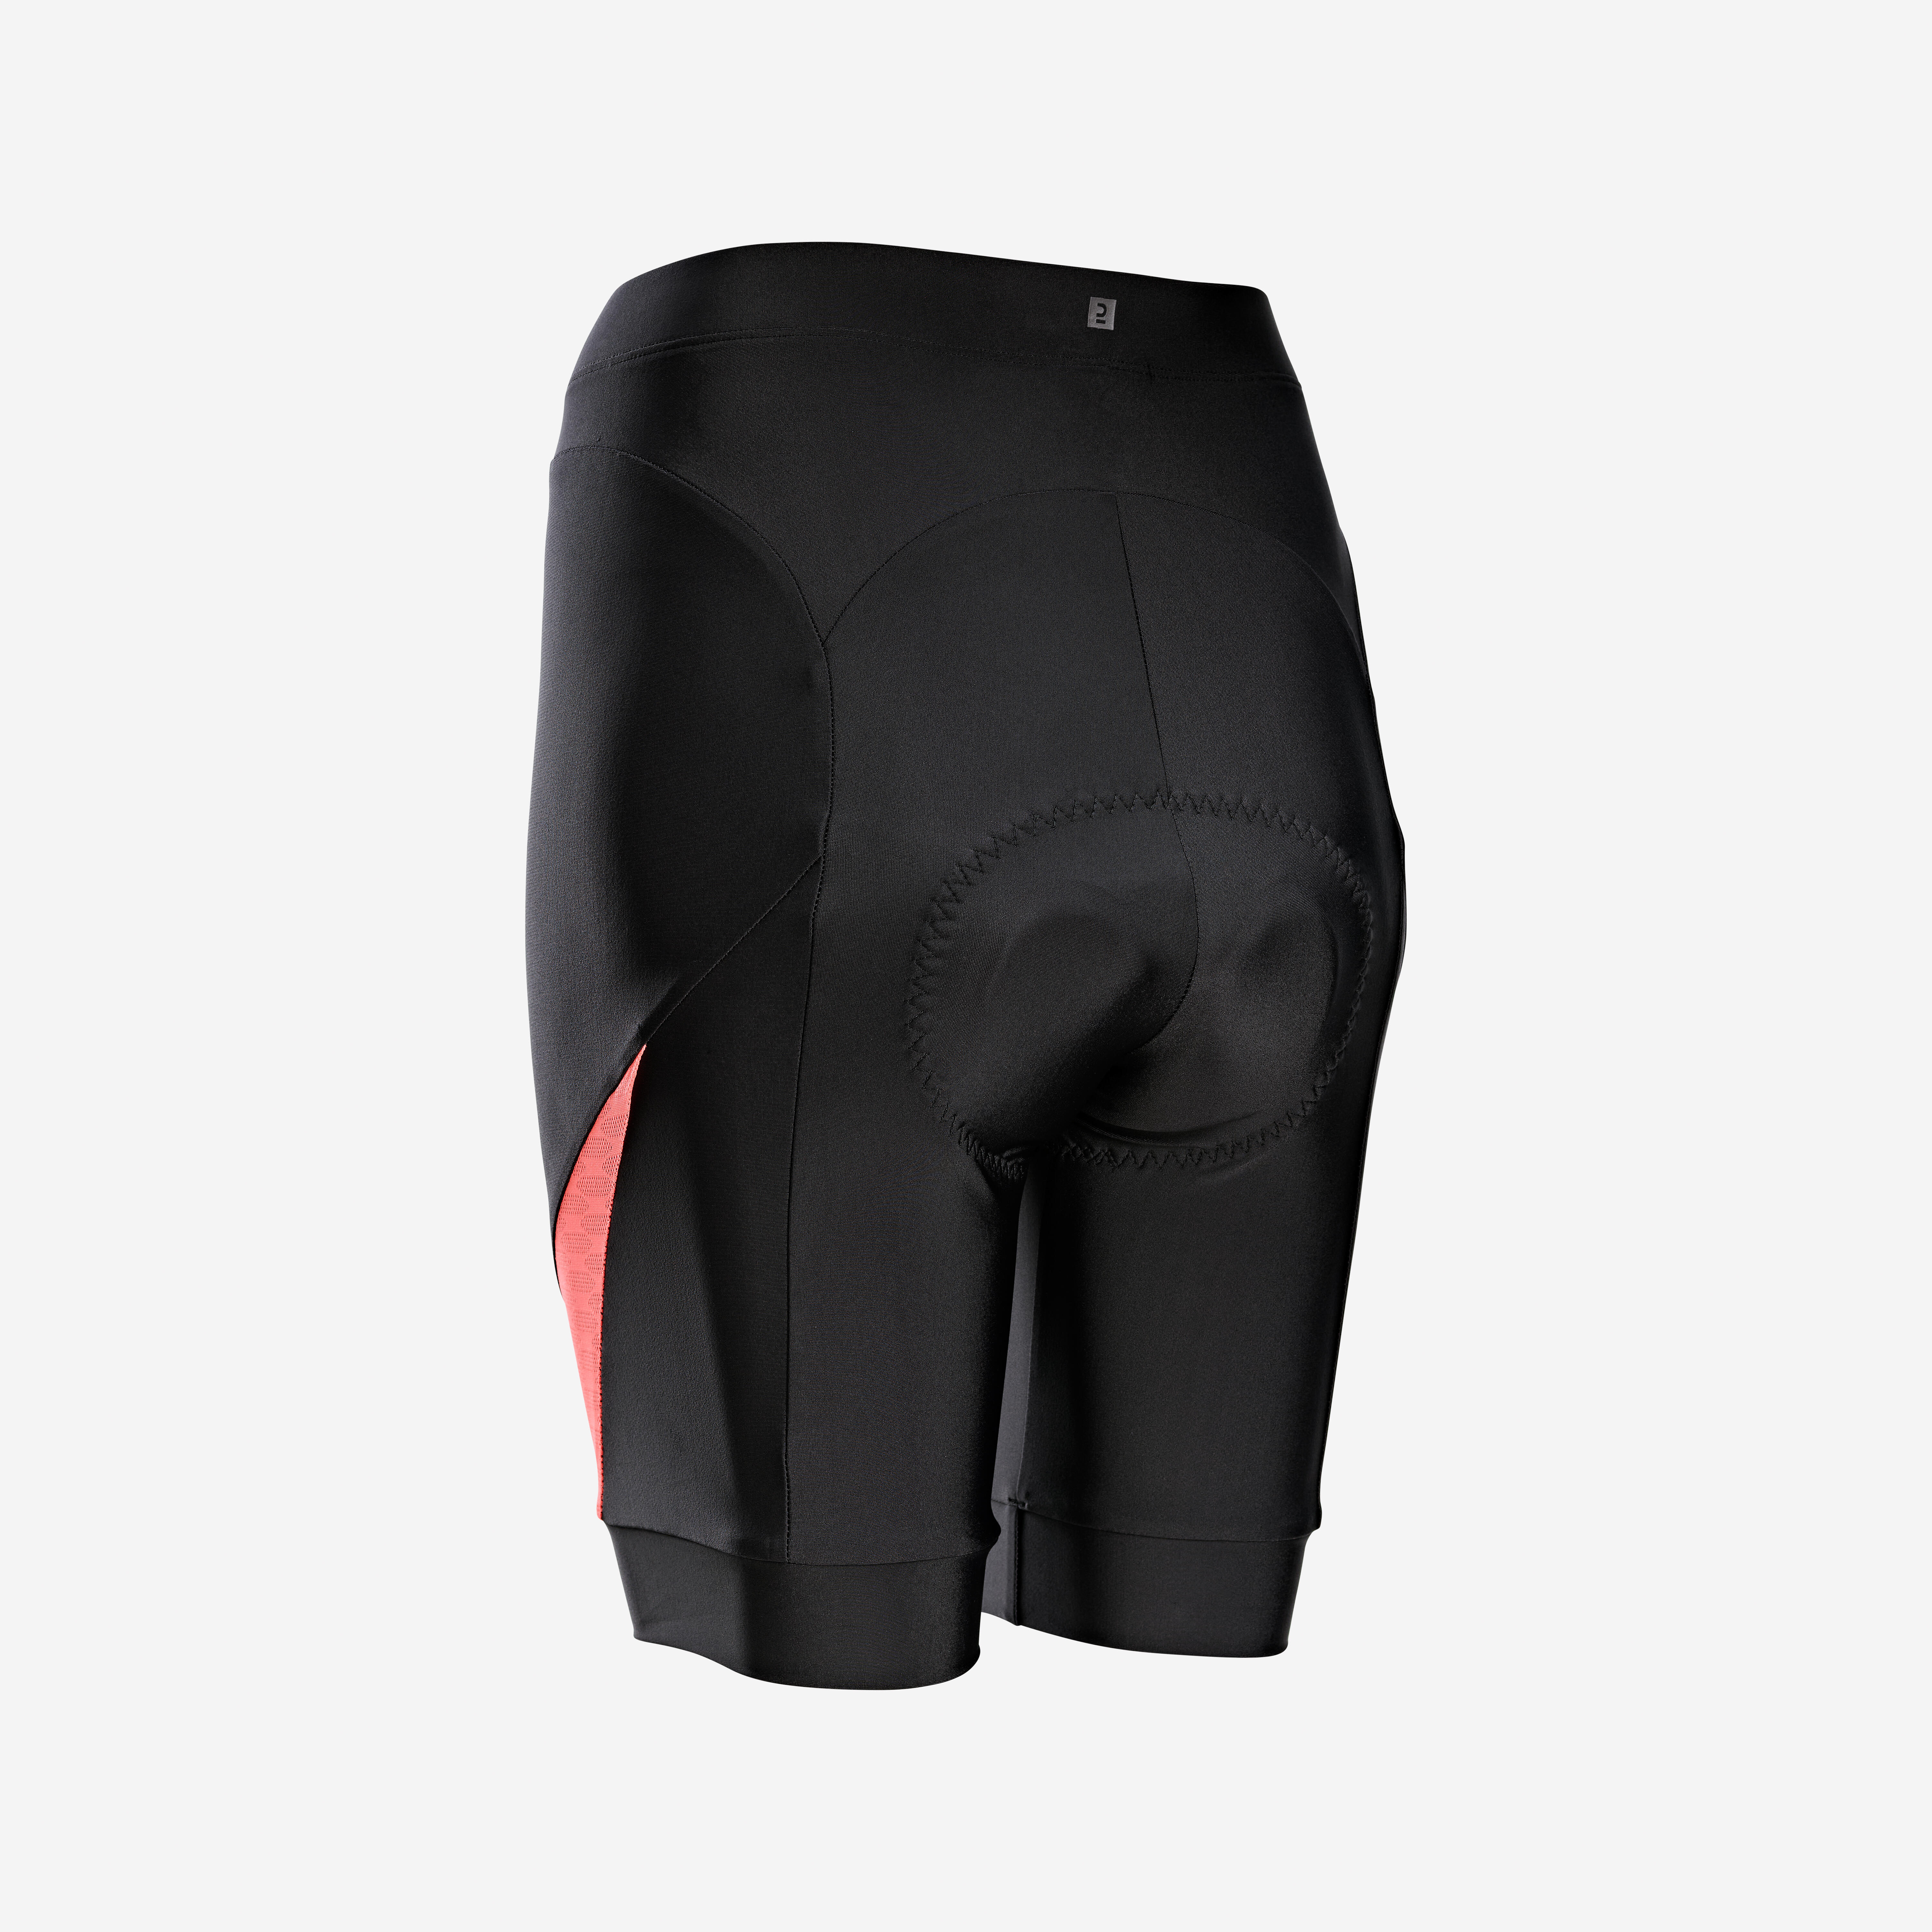 Women’s Strapless Cycling Shorts - Black/Coral - VAN RYSEL